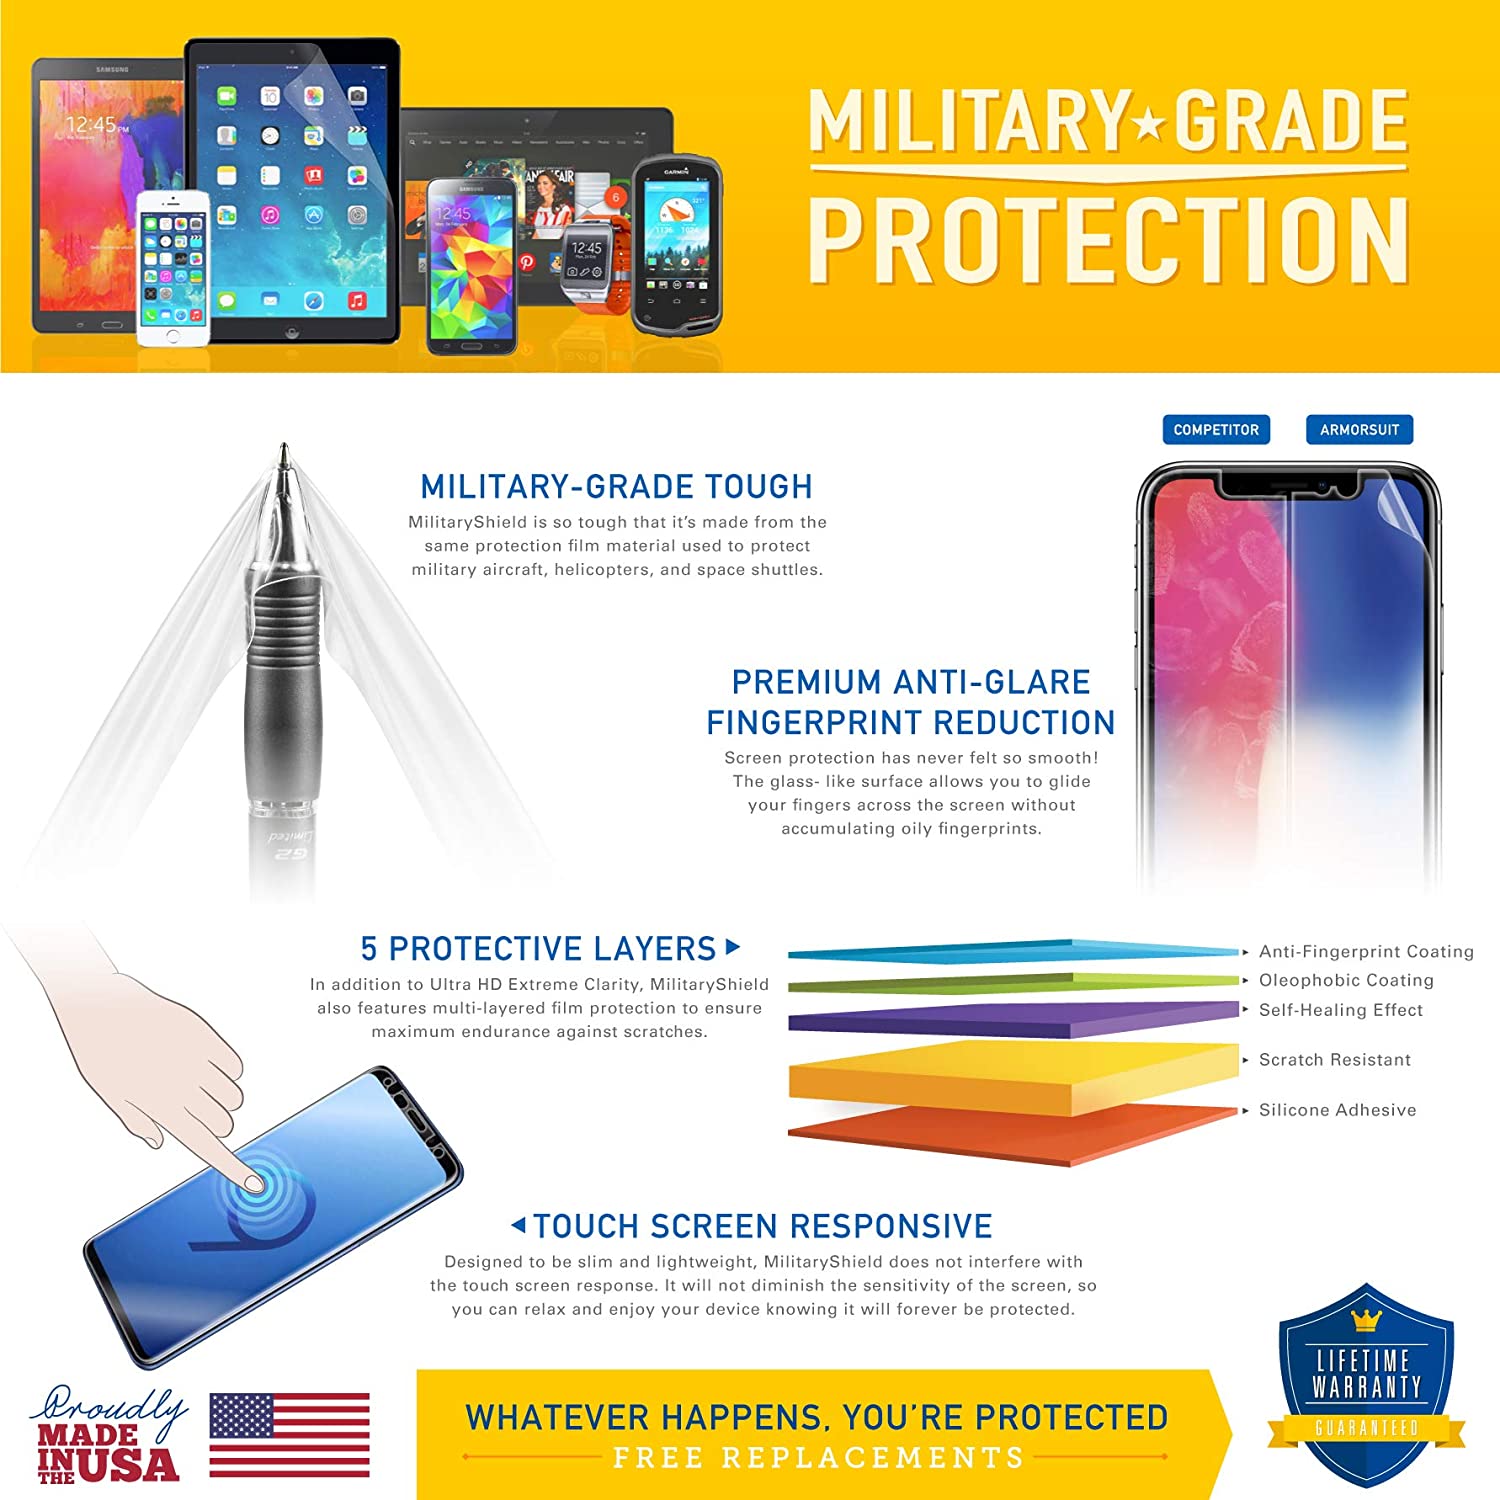 Apple iPhone X Screen Protector + Full Body Skin Protector